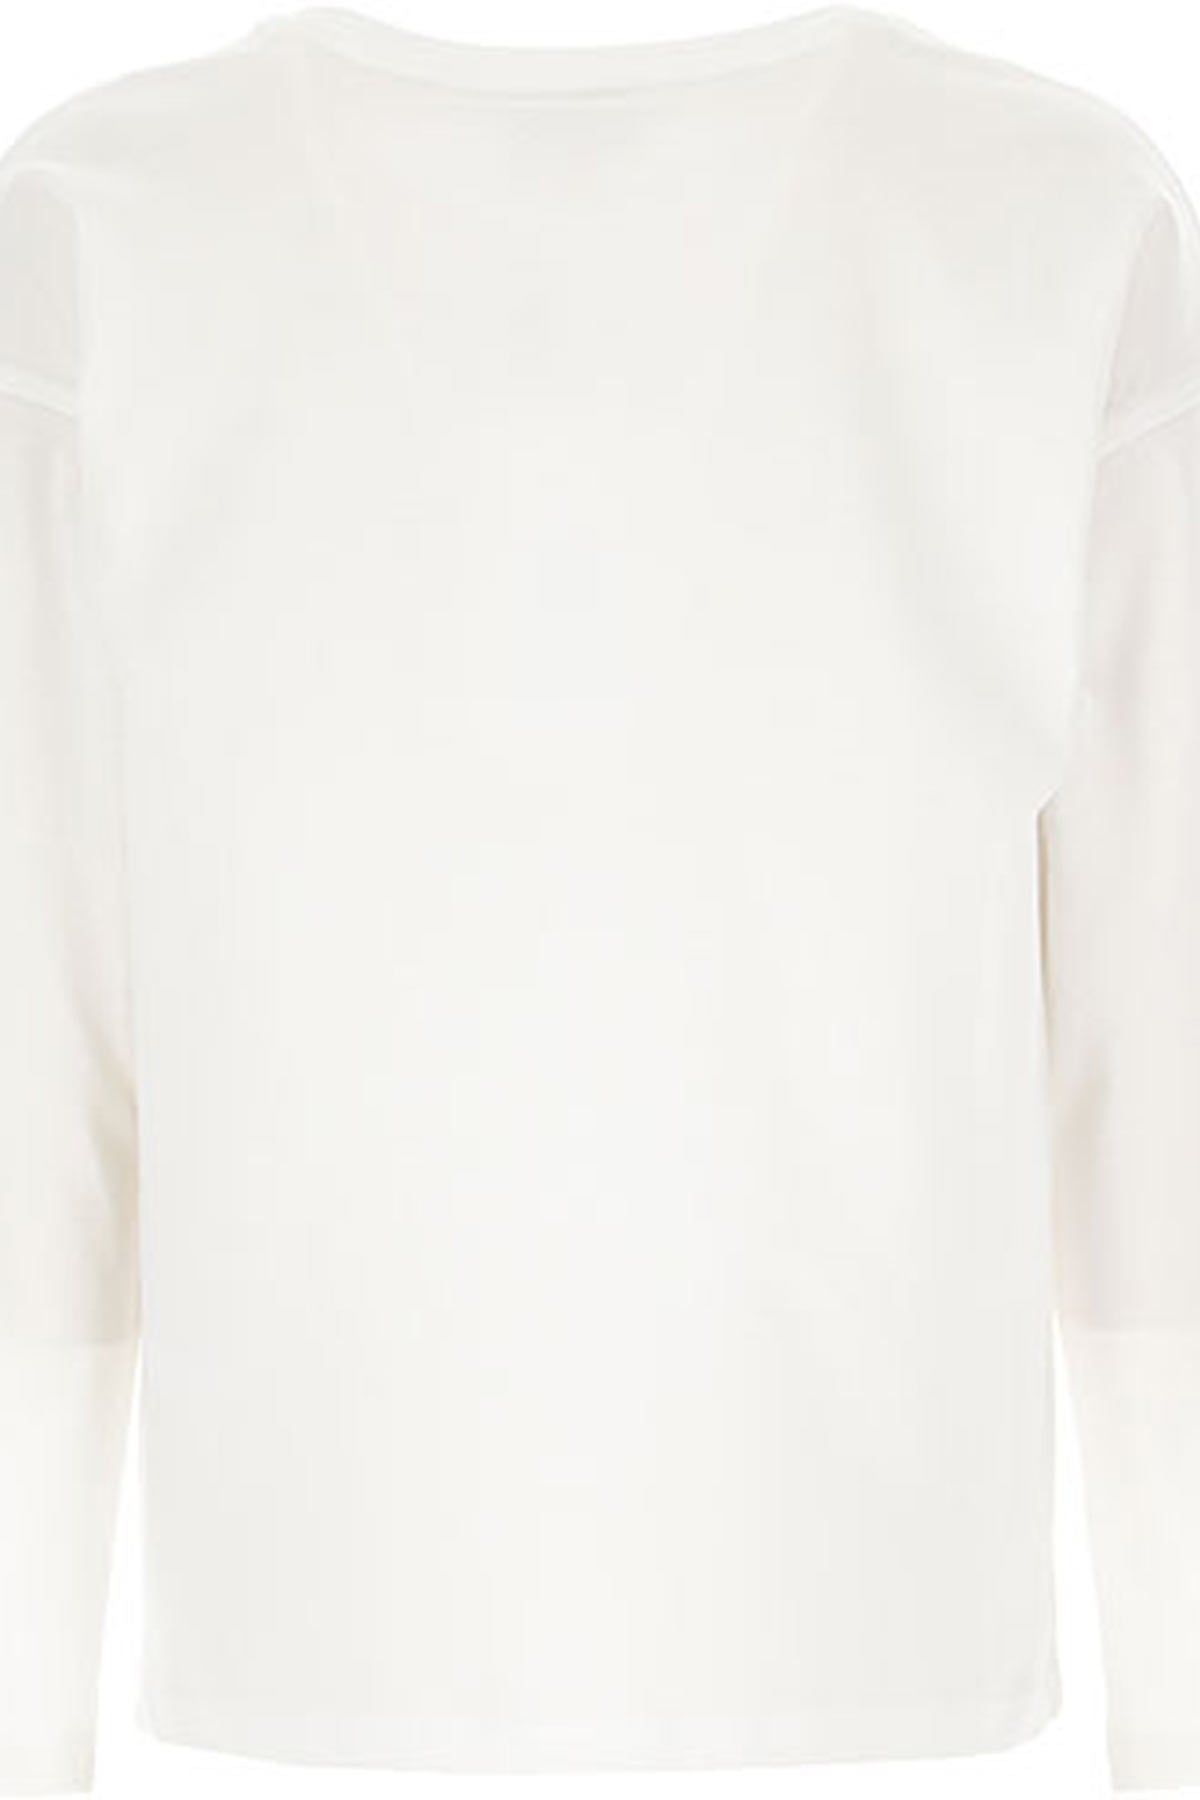 Kenzo 2-6 Yaş Kız Kaplan Logolu Paris T-shirt-Libas Trendy Fashion Store